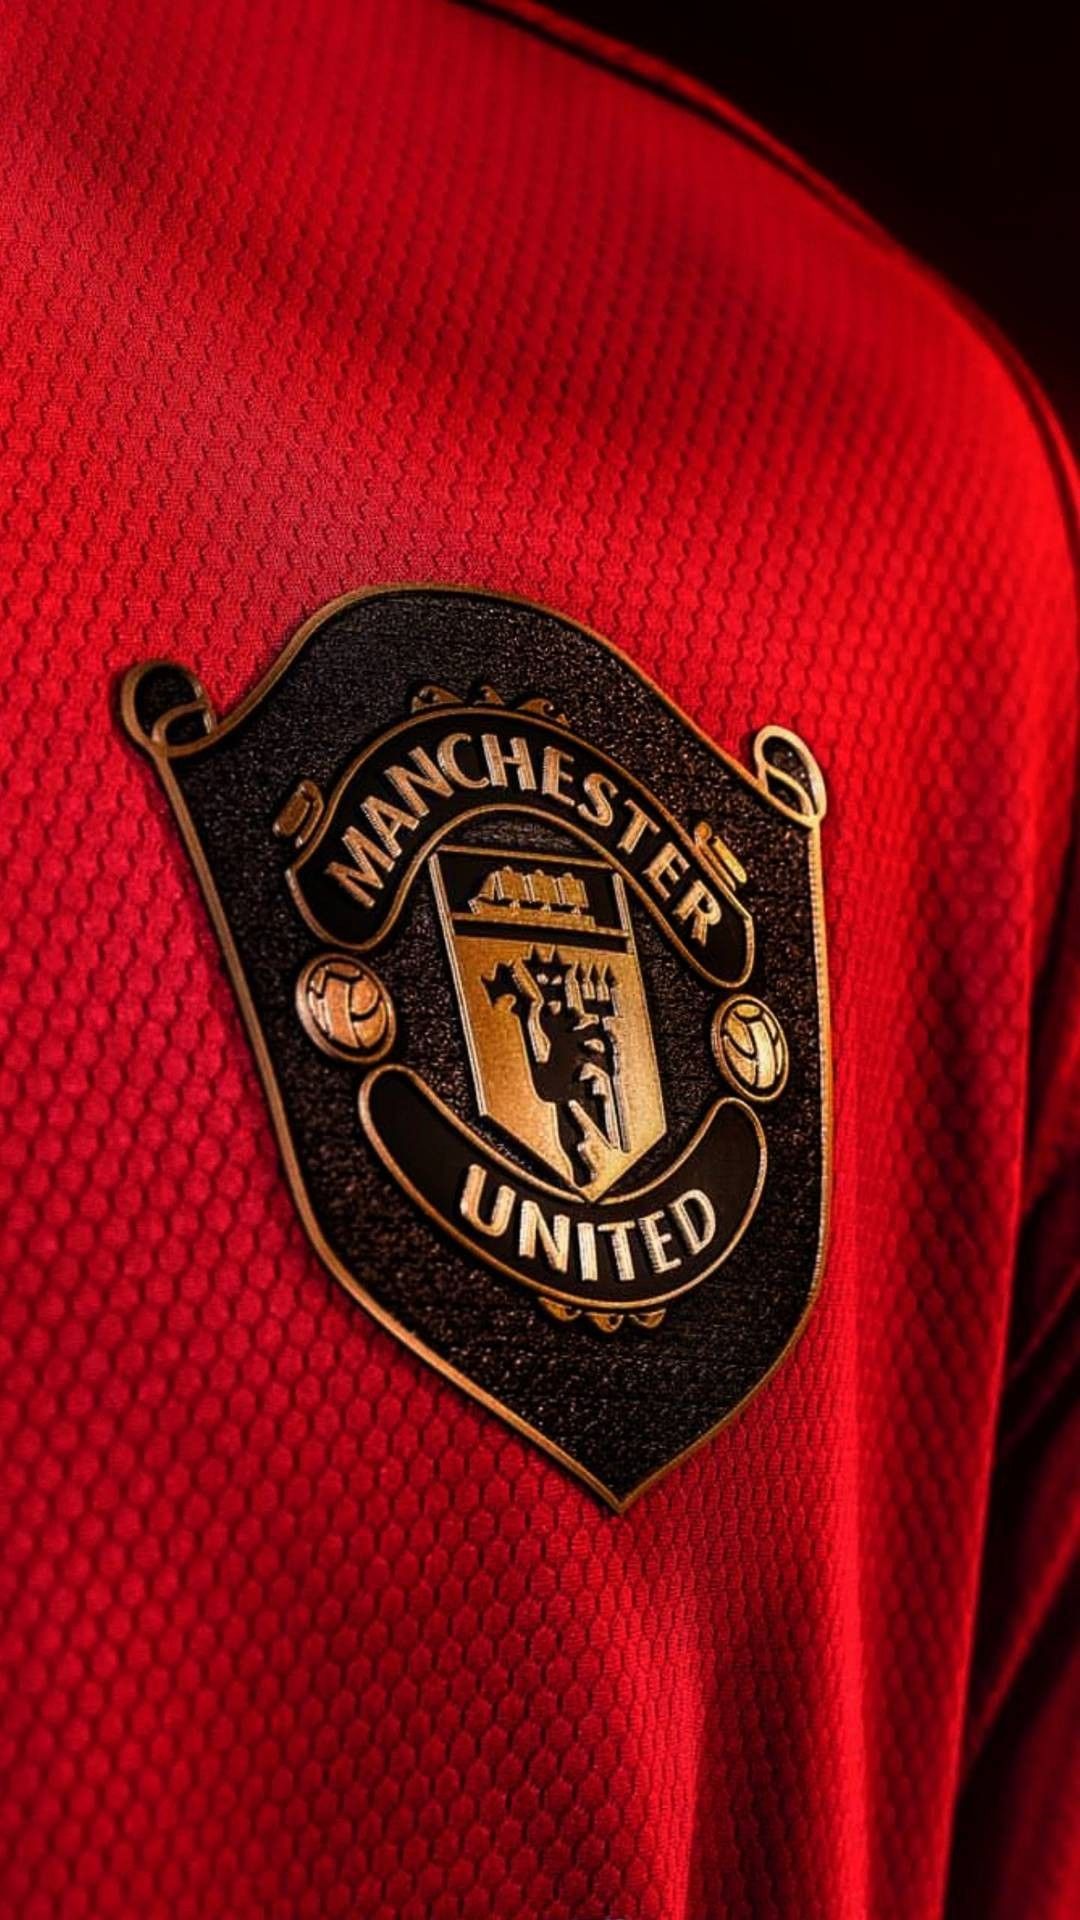 Man Utd wallpaper. Manchester united wallpaper, Manchester united, Manchester united logo